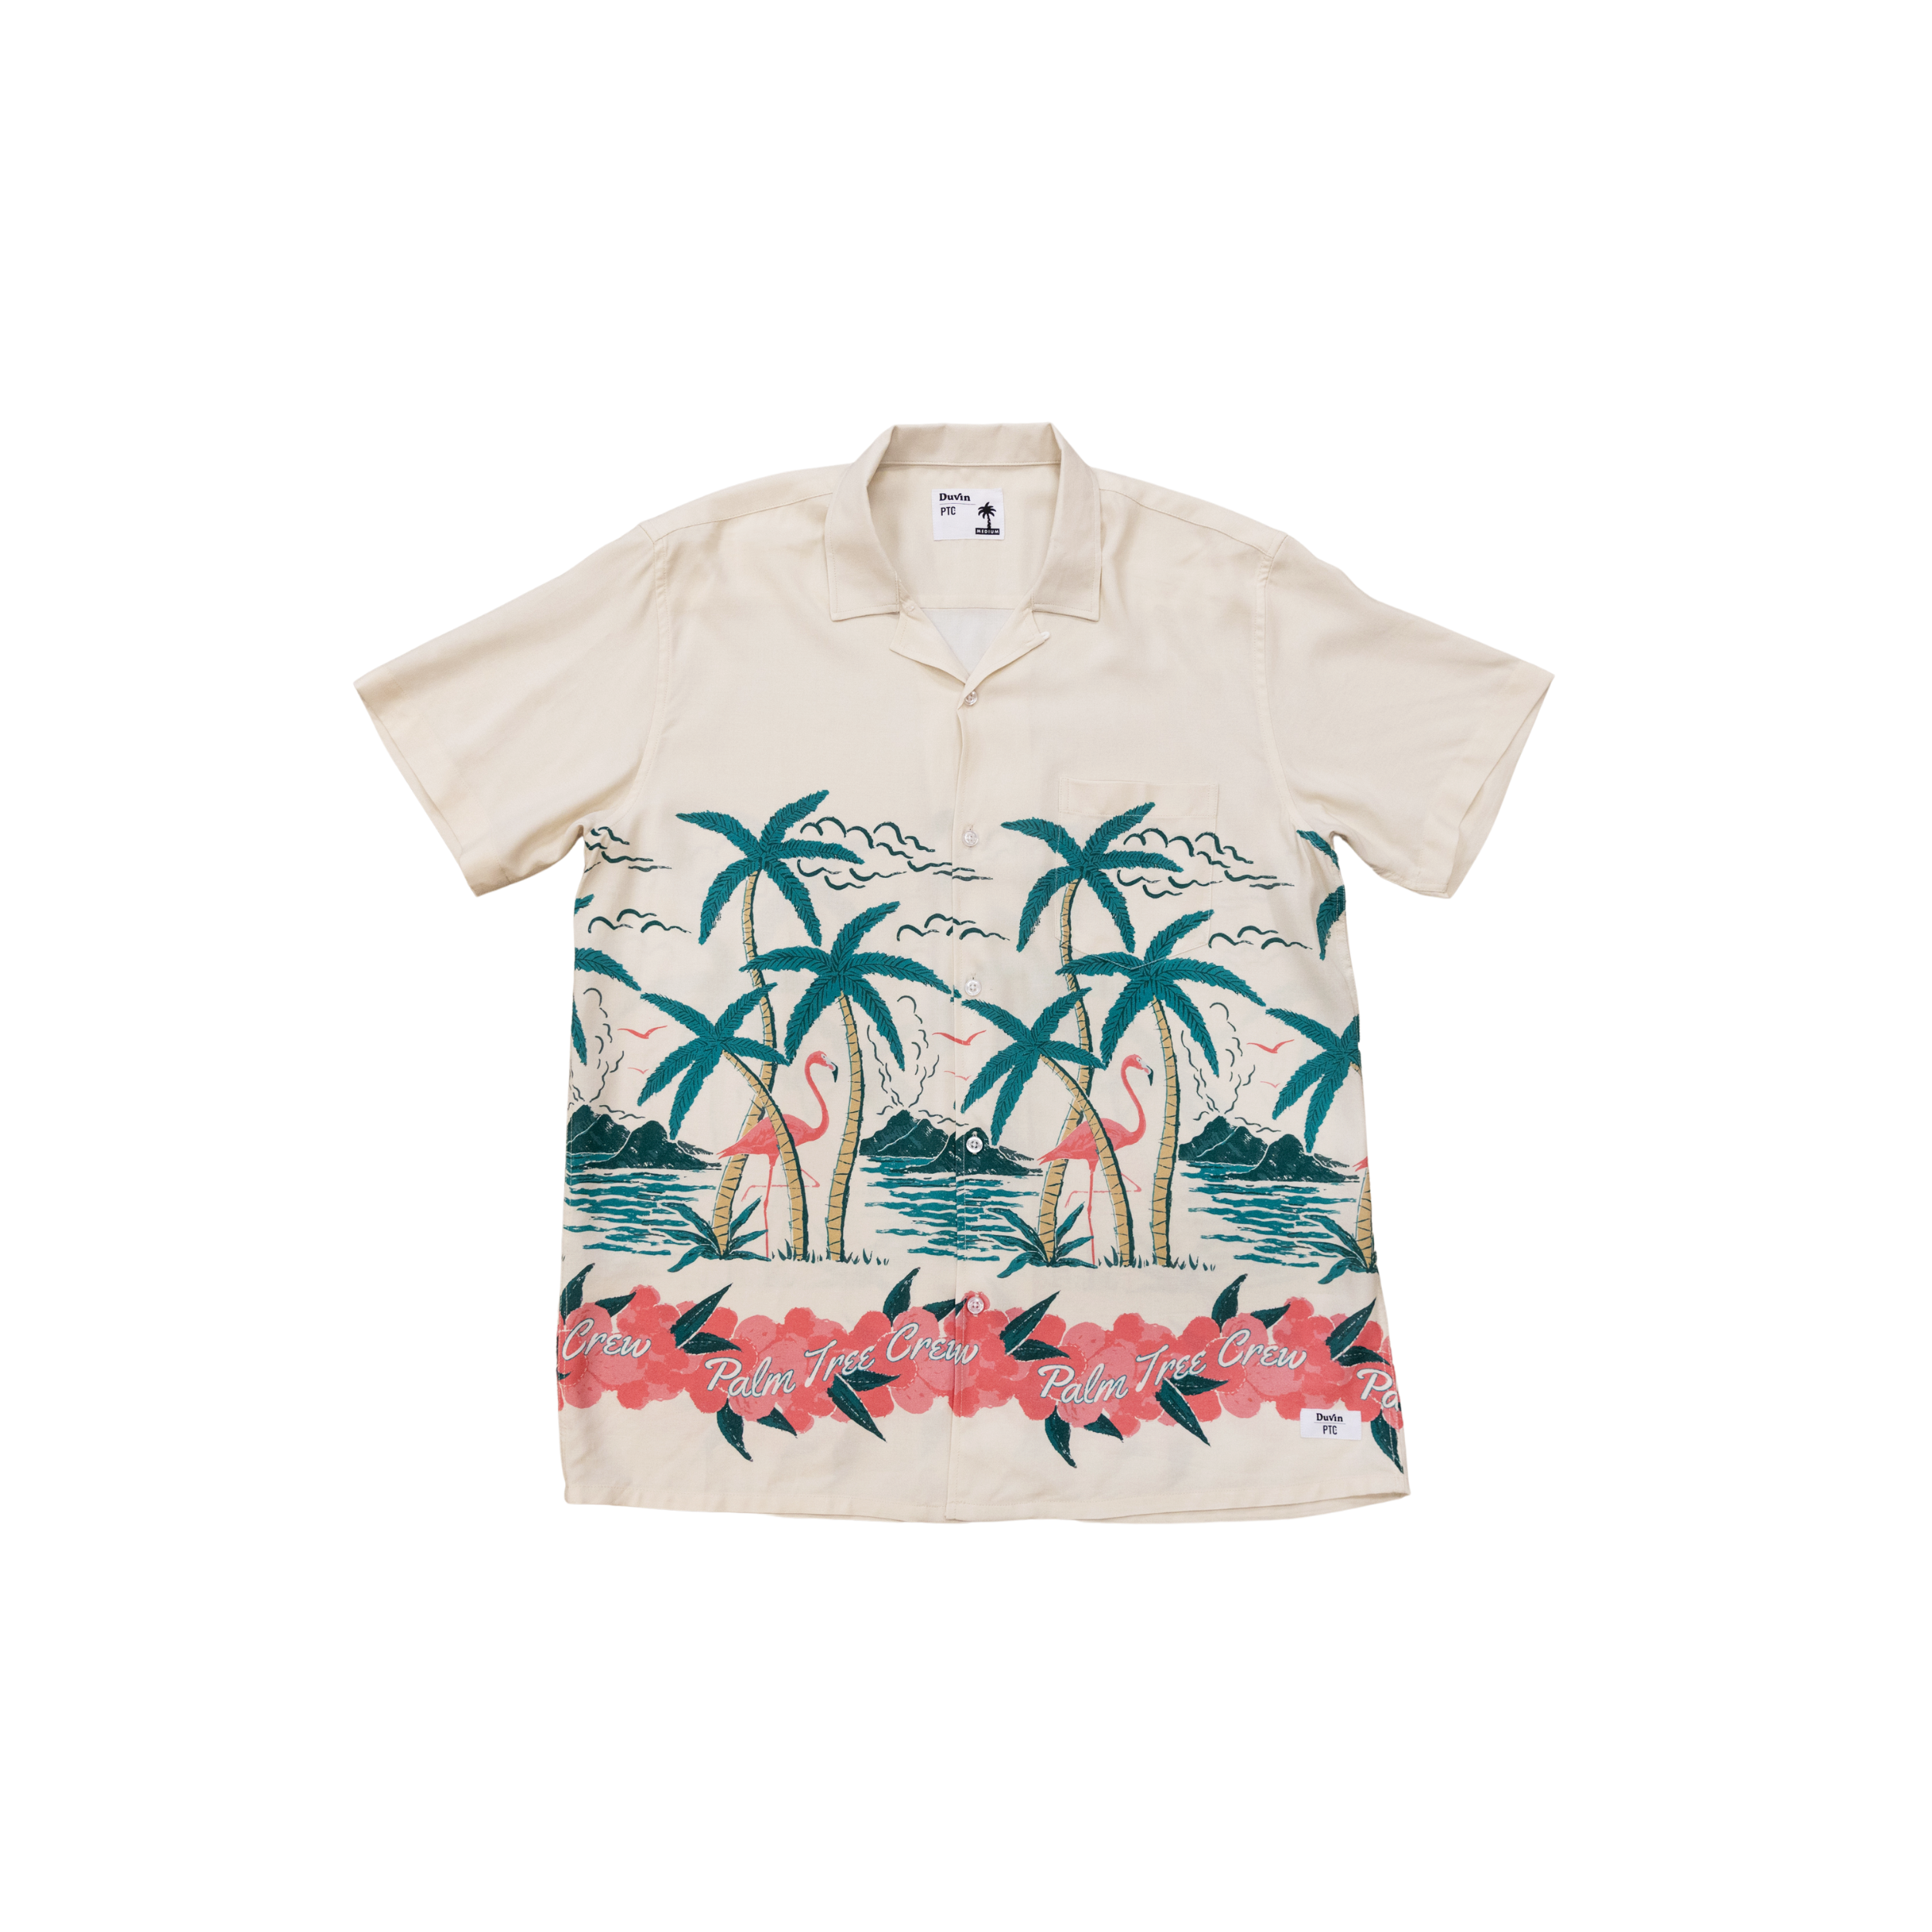 Palm Tree Crew x Duvin Button Up Shirt